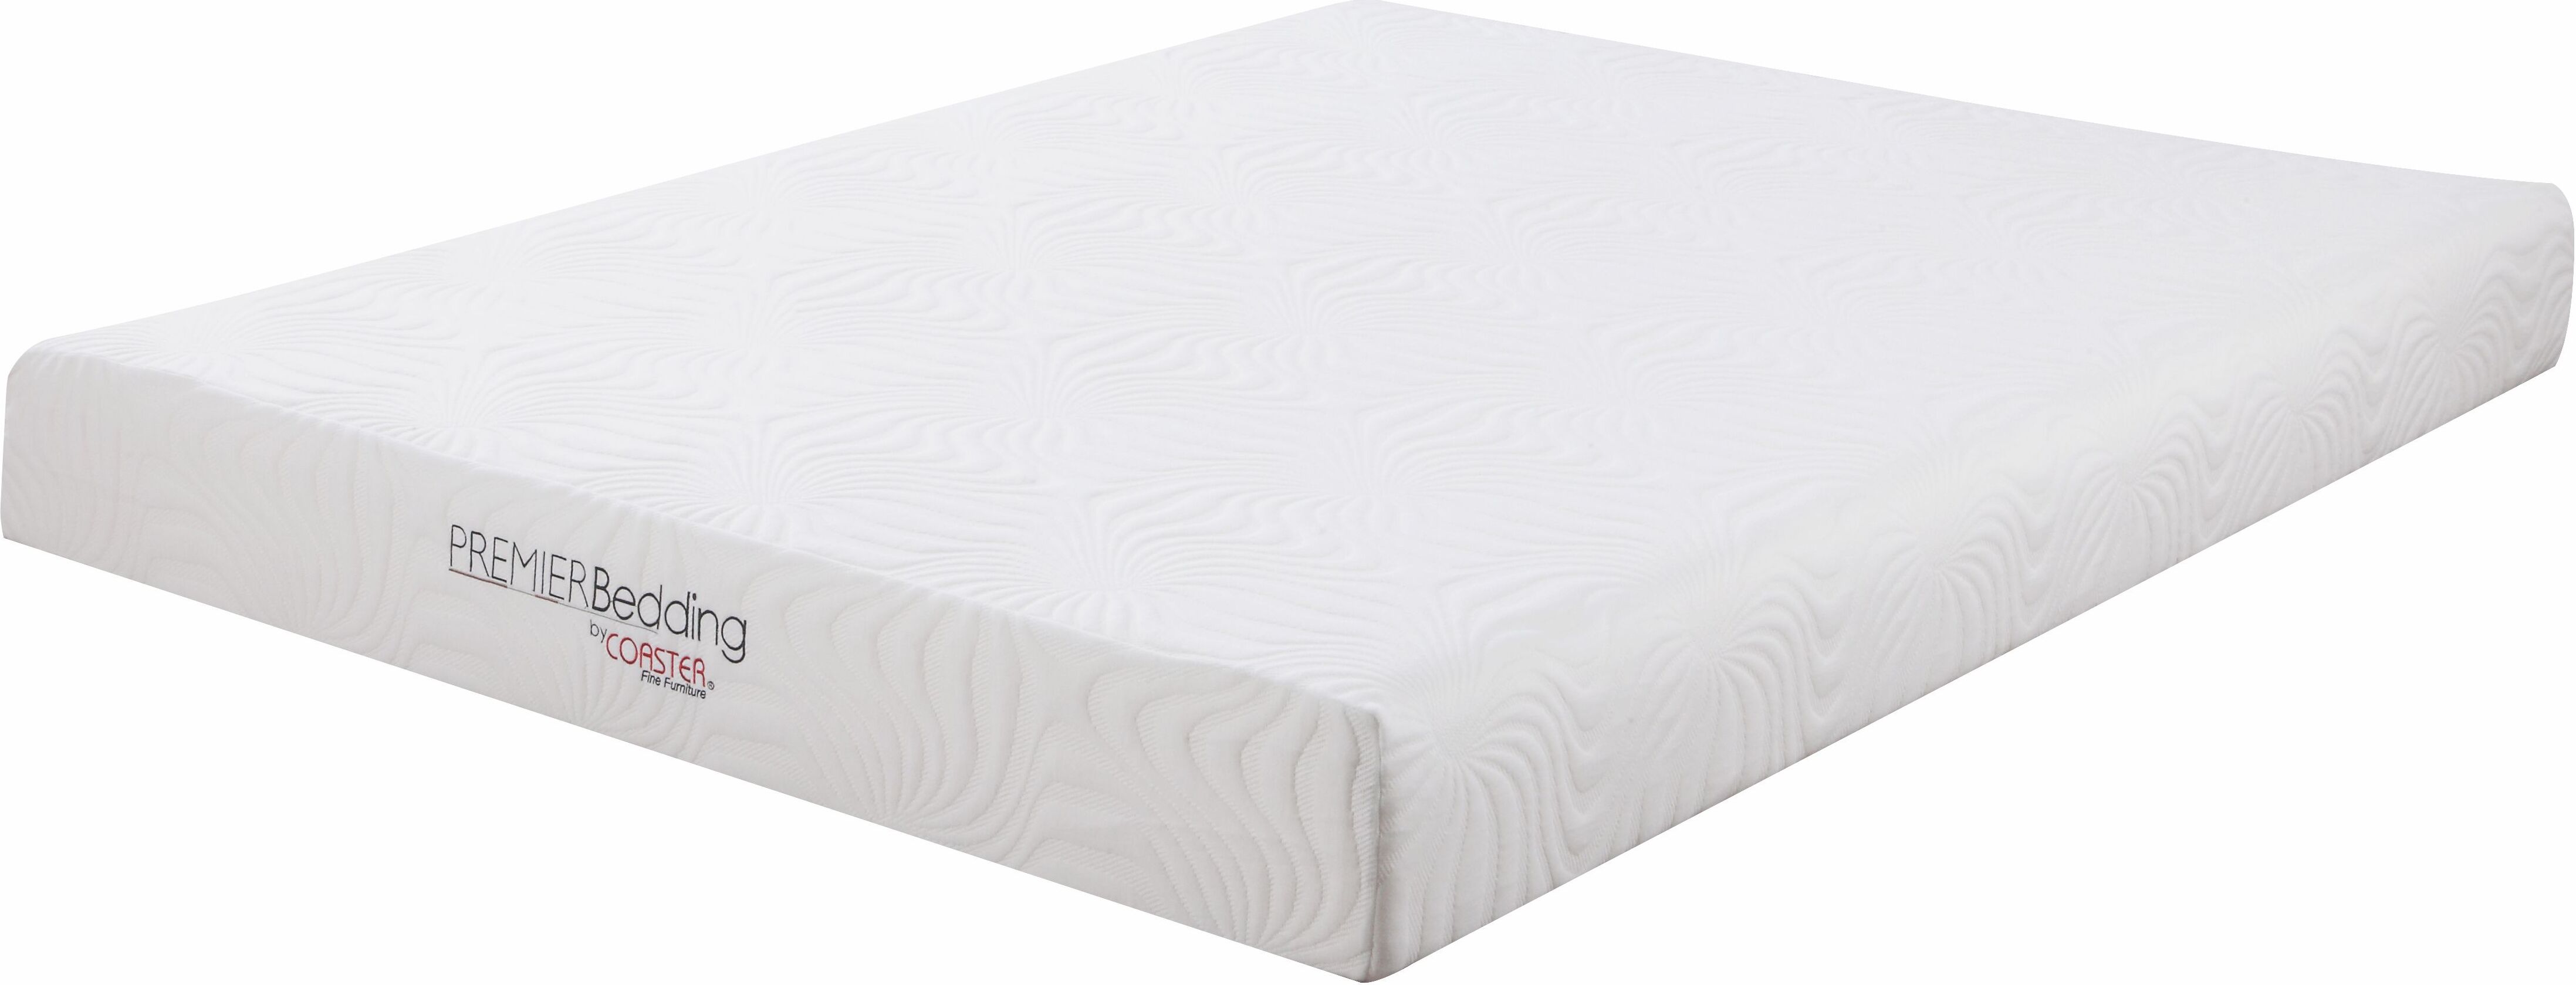 8 twin foam boxed mattress